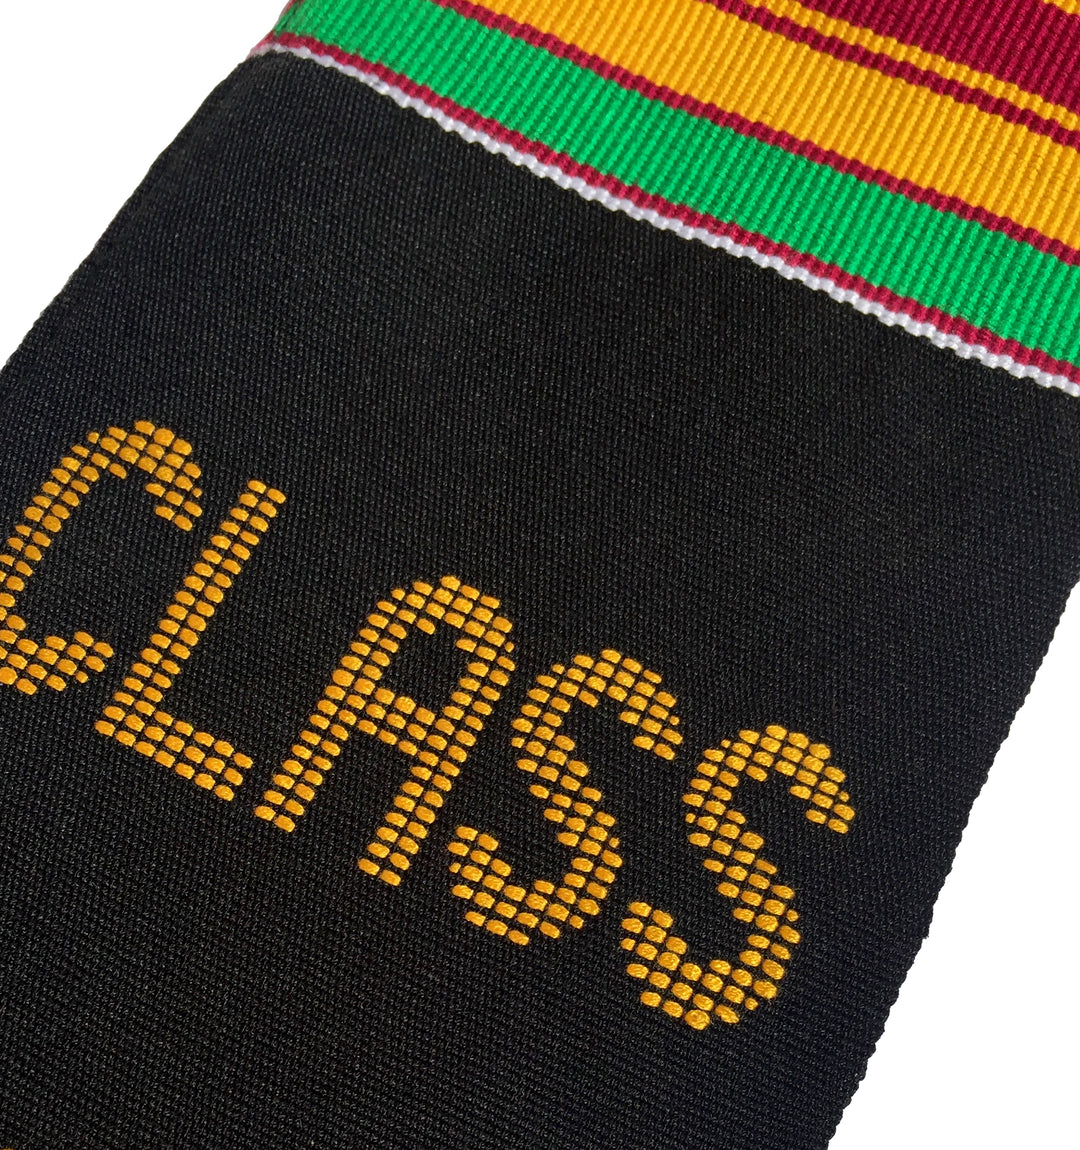 Black Girl Magic Class of 2023 Authentic Handwoven Kente Cloth Graduation Stole